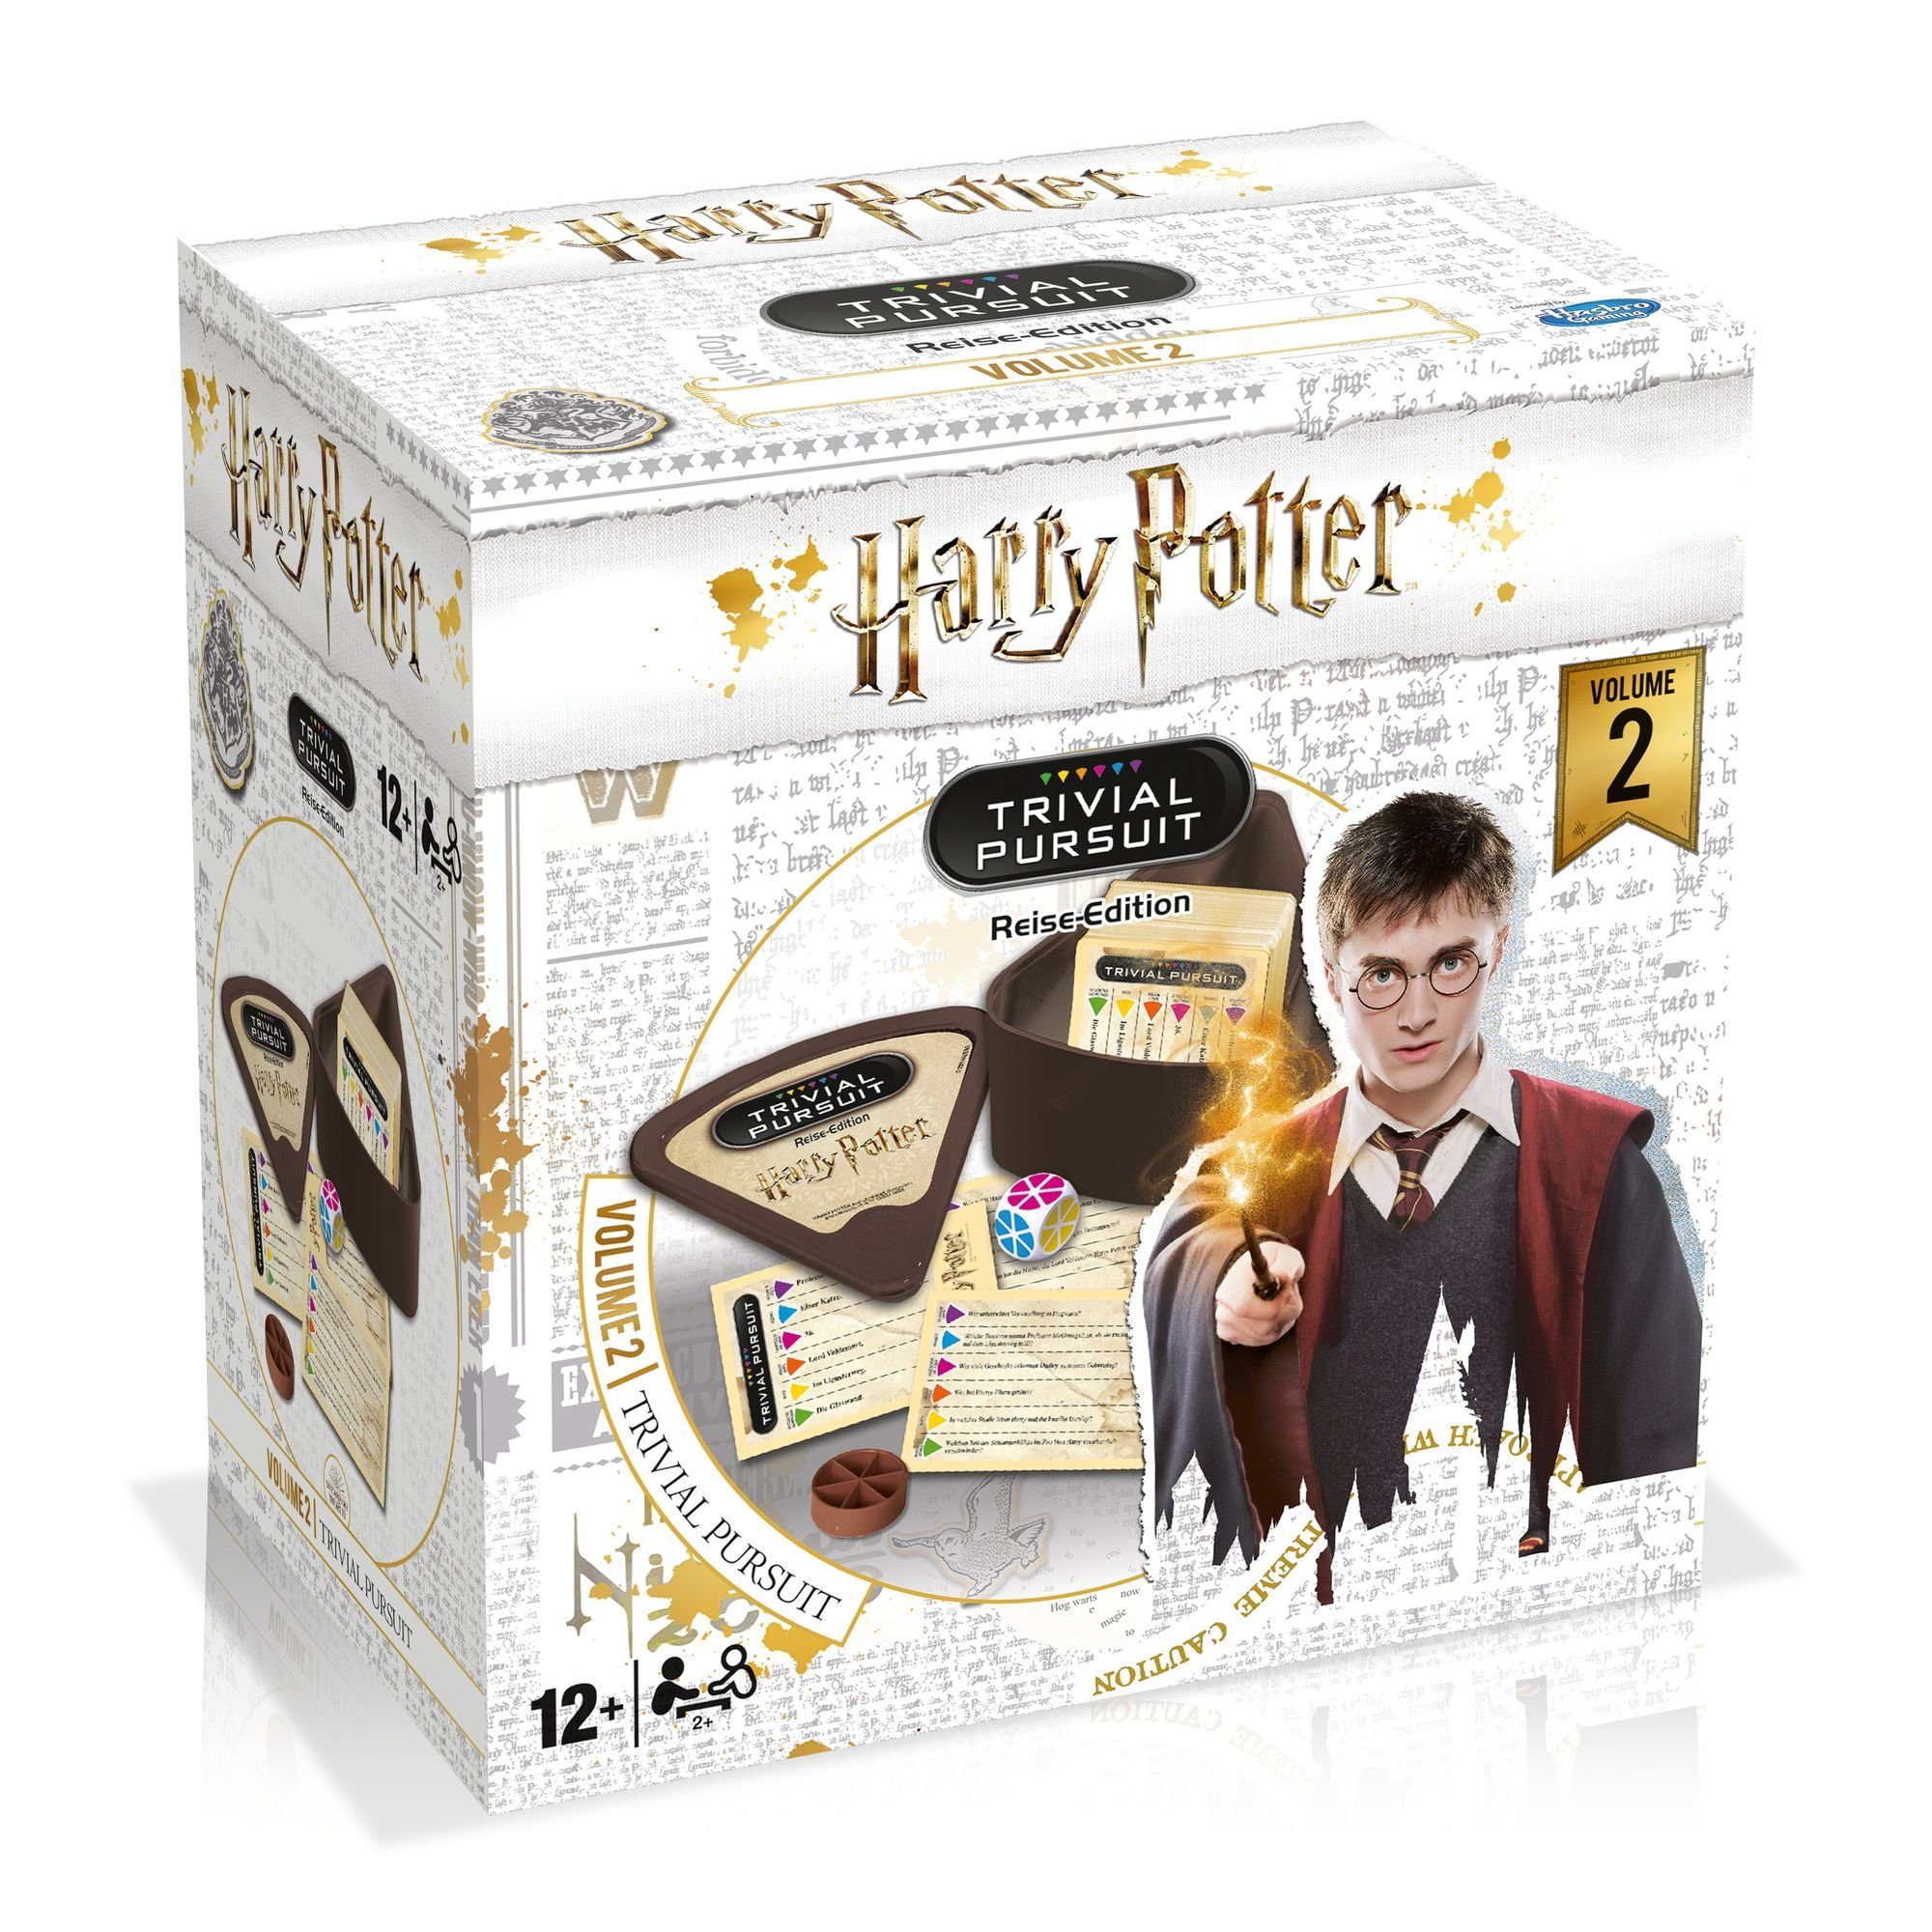 Moves Wissenspiel Pursuit Trivial 2 Spiel, Potter Harry Vol. Winning